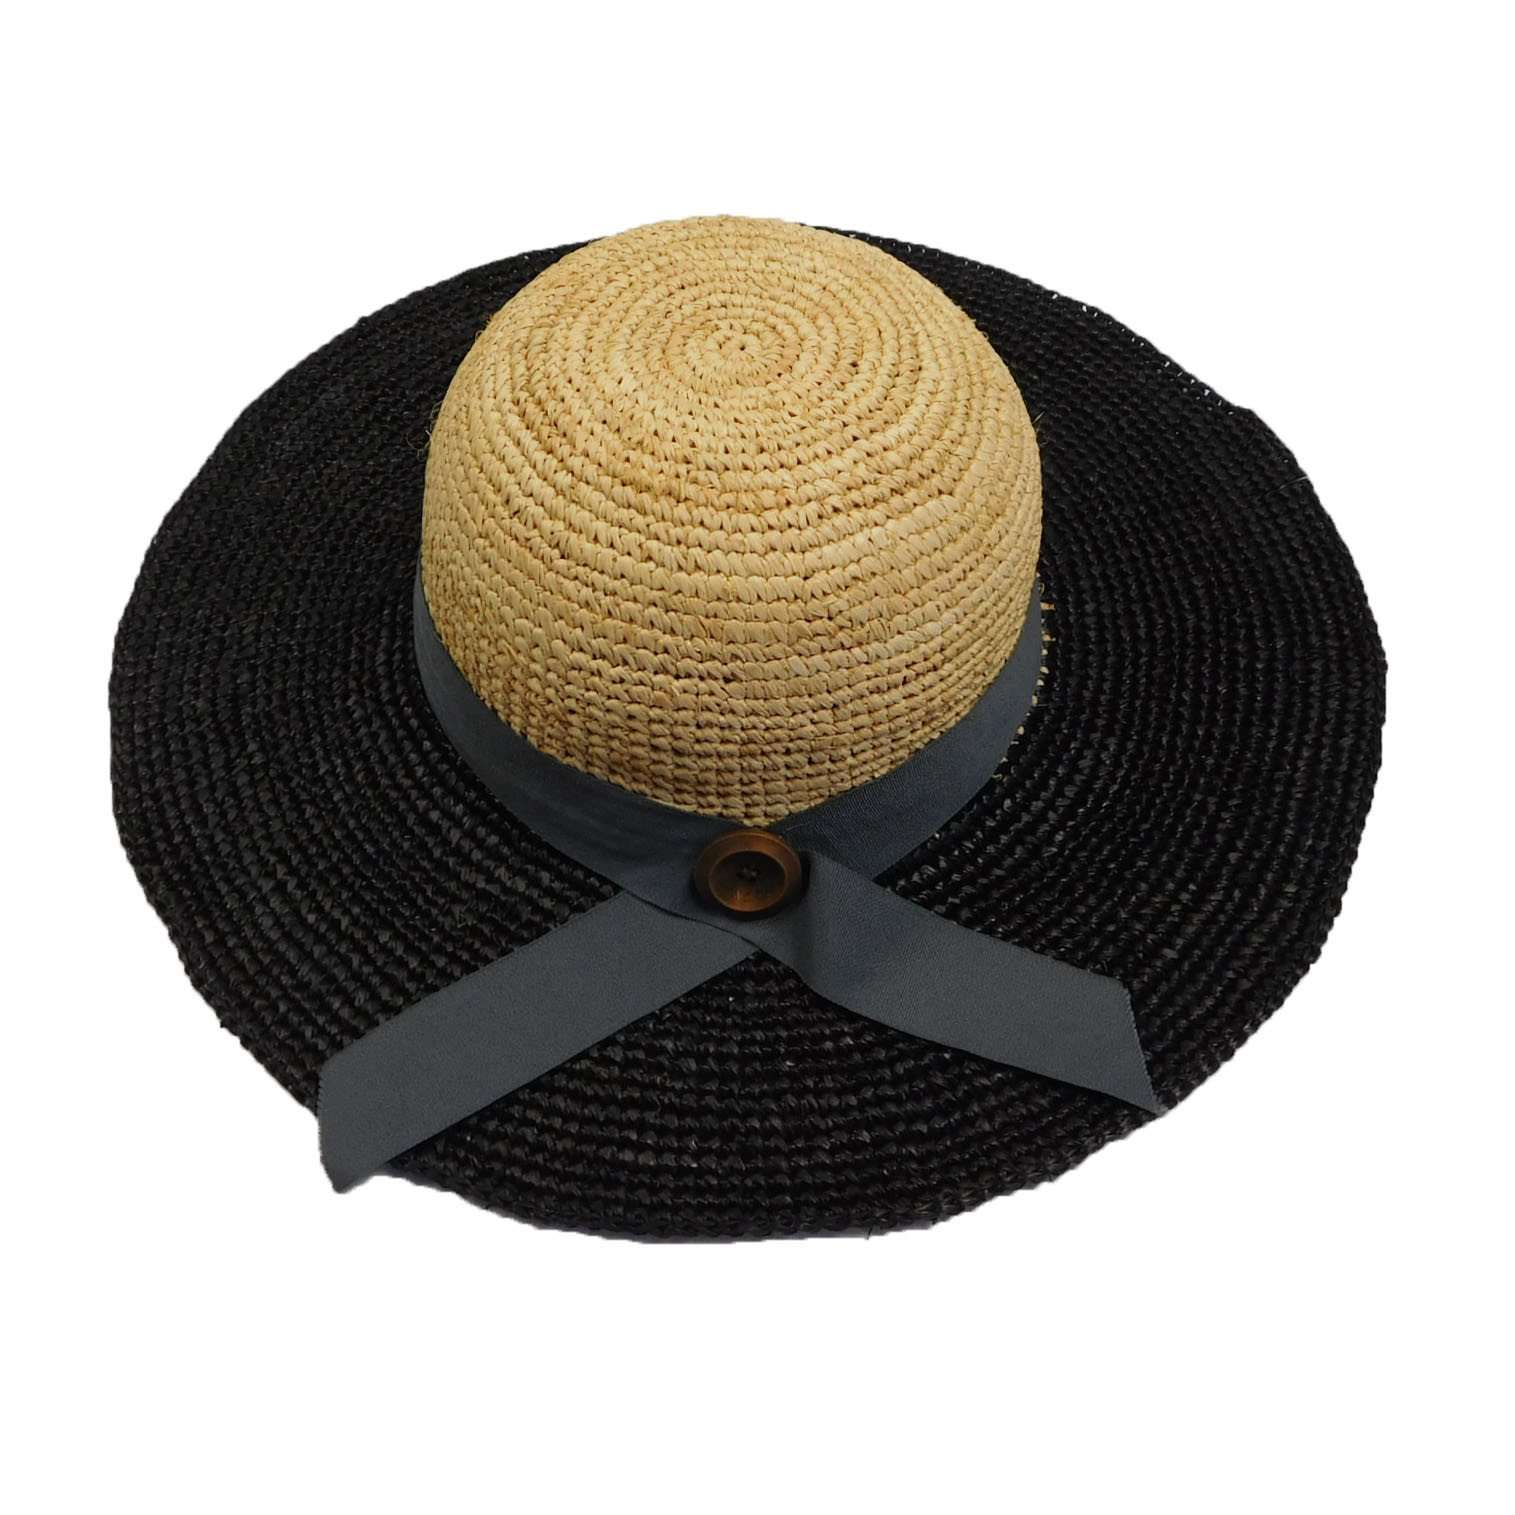 Black and Natural Two Tone Crocheted Raffia Sun Hat - Boardwalk Style